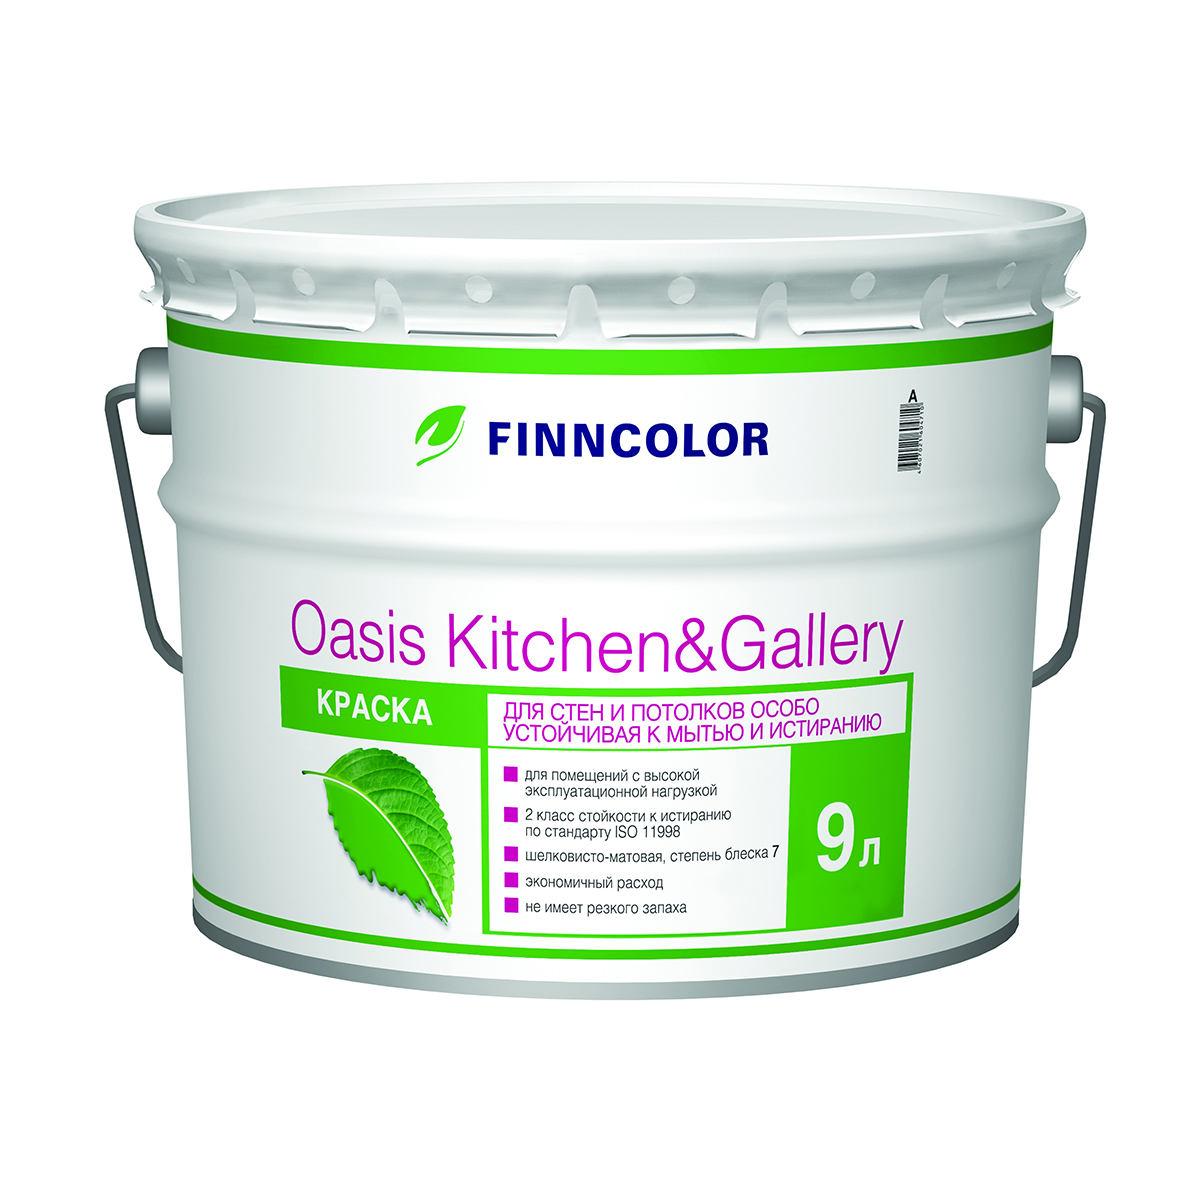 банка для хранения tkano kitchen spirit Краска Finncolor Oasis Kitchen & Gallery, база A, 9 л